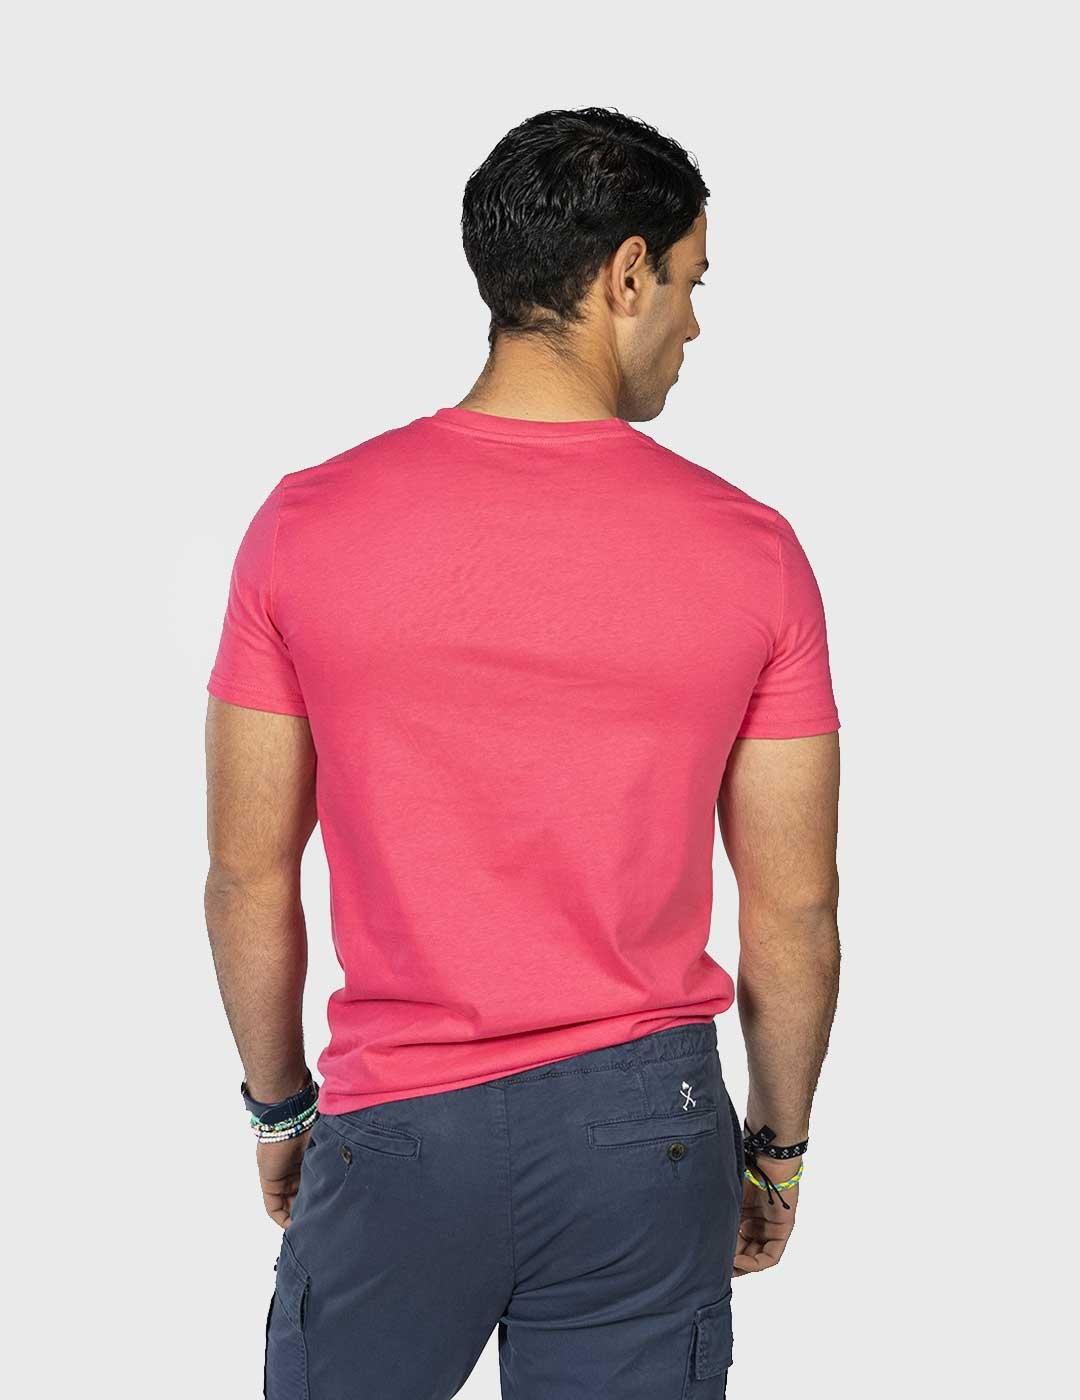 Camiseta Harper & Neyer Lances rosa para hombre